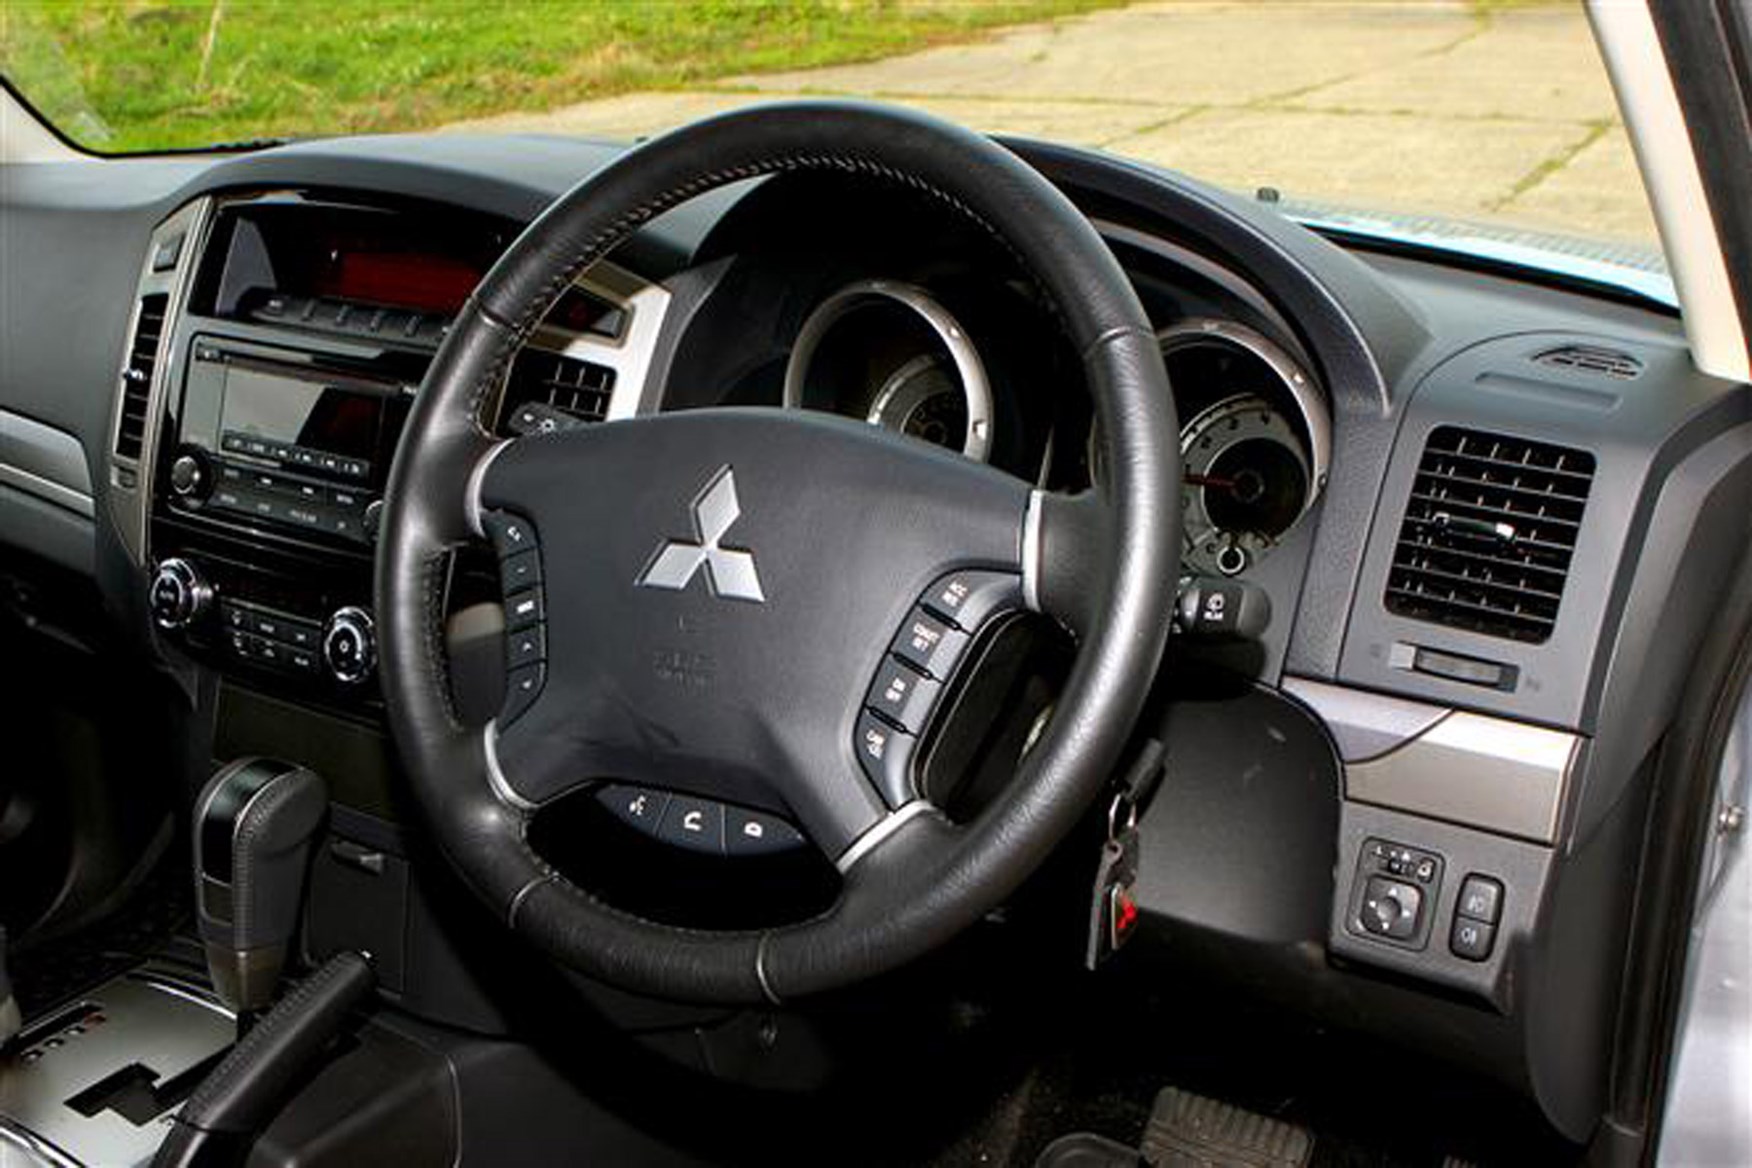 Mitsubishi Shogun review on Parkers Vans - cabin detail